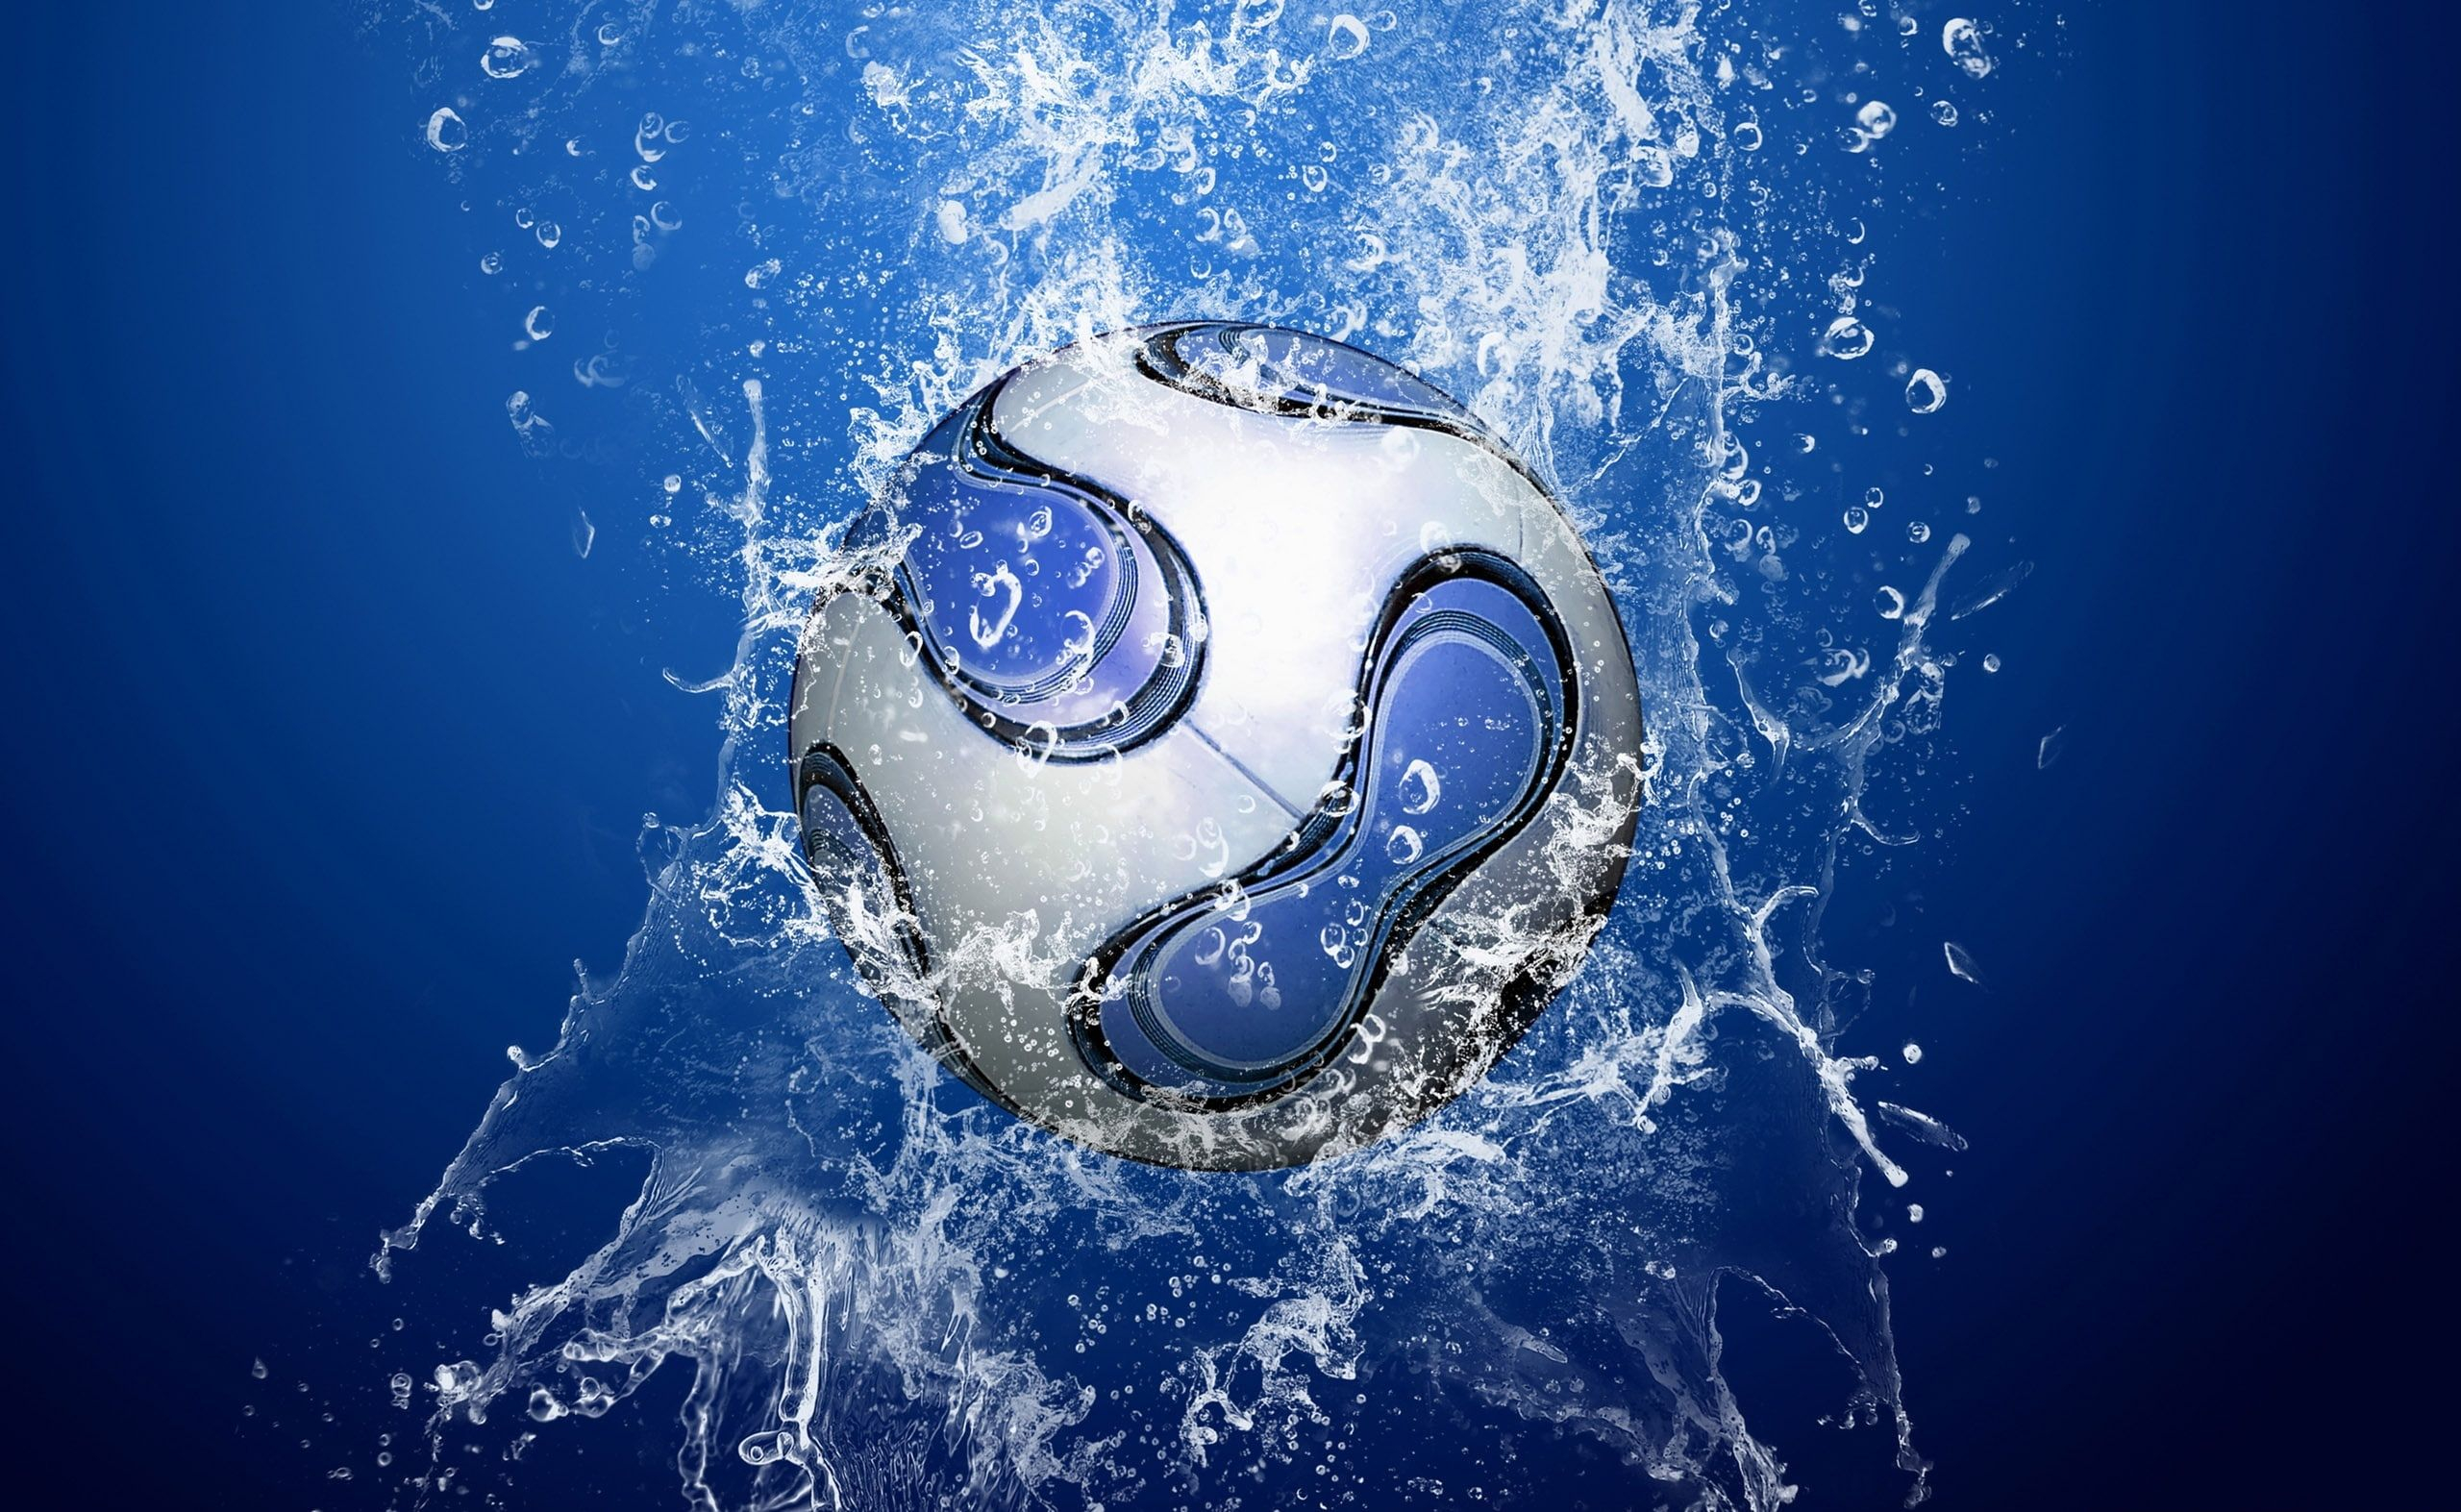 2560x1573 Football, white and blue soccer ball illustration #Sports #Football #Soccer #2K #wallpap&acirc;&#128;&brvbar; | Best iphone wallpapers, Cool iphone wallpapers hd, Wallpaper backgrounds